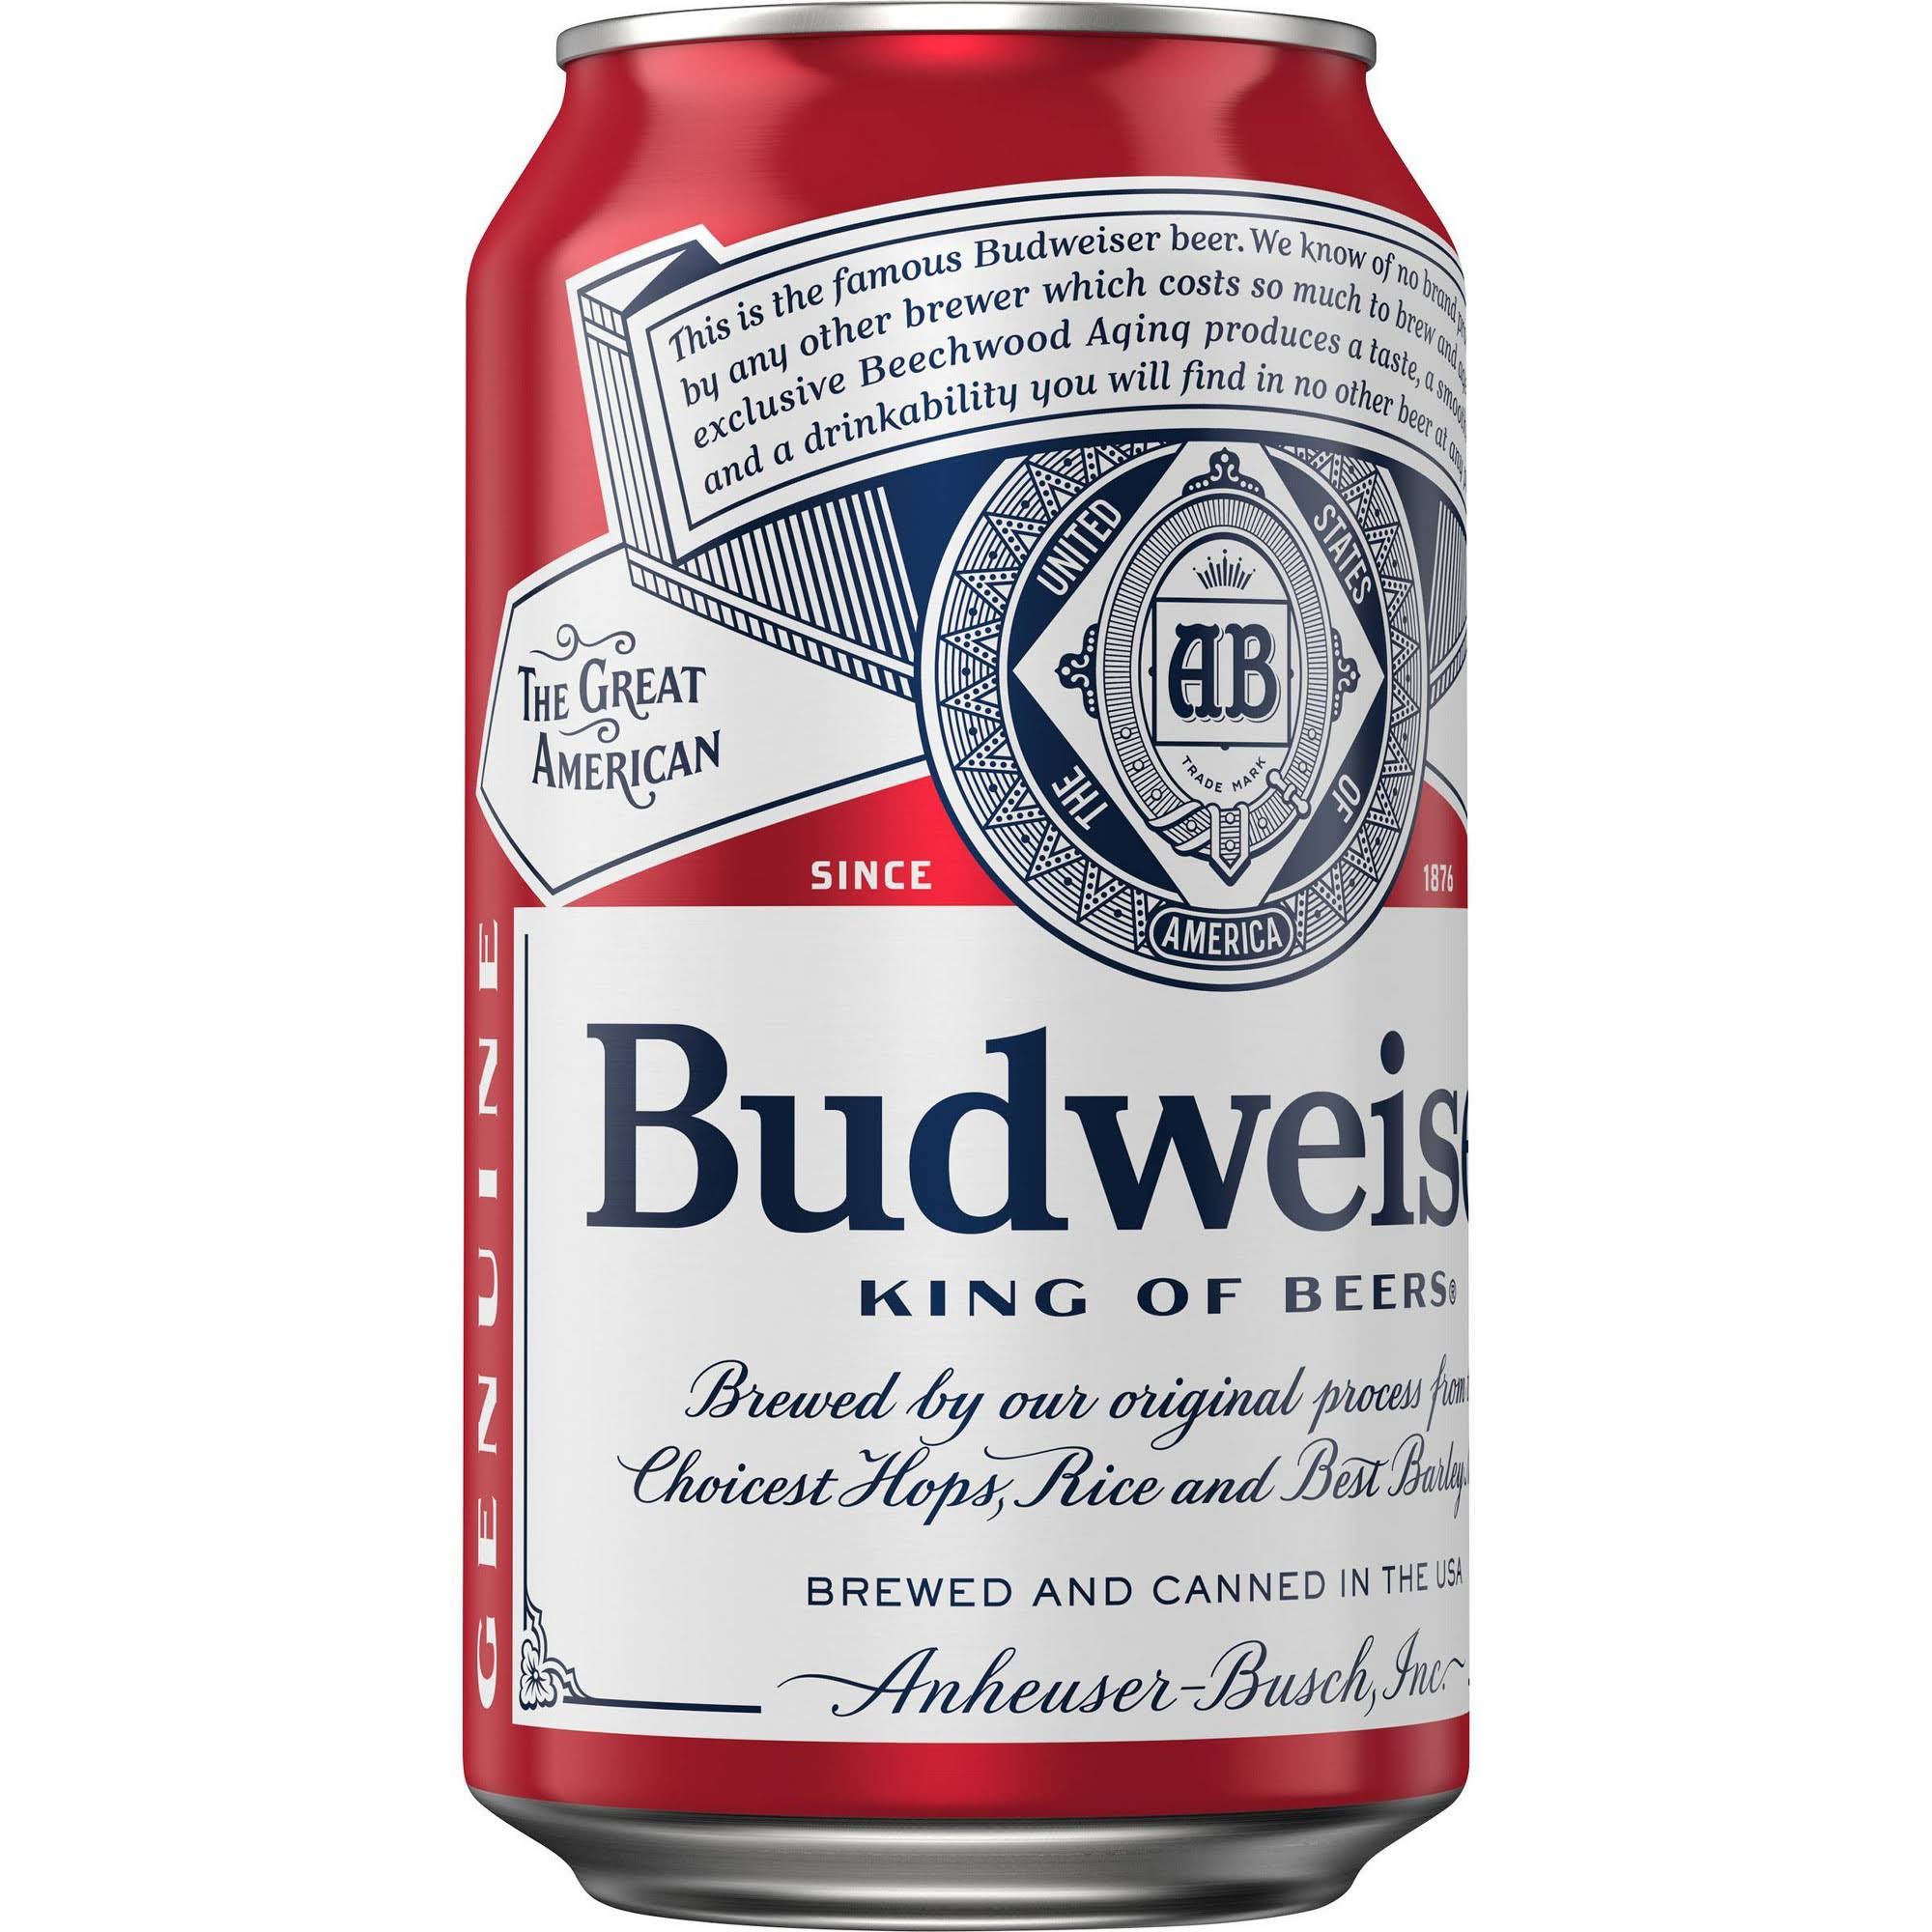 Budweiser Beer - 6 pack, 12 fl oz cans